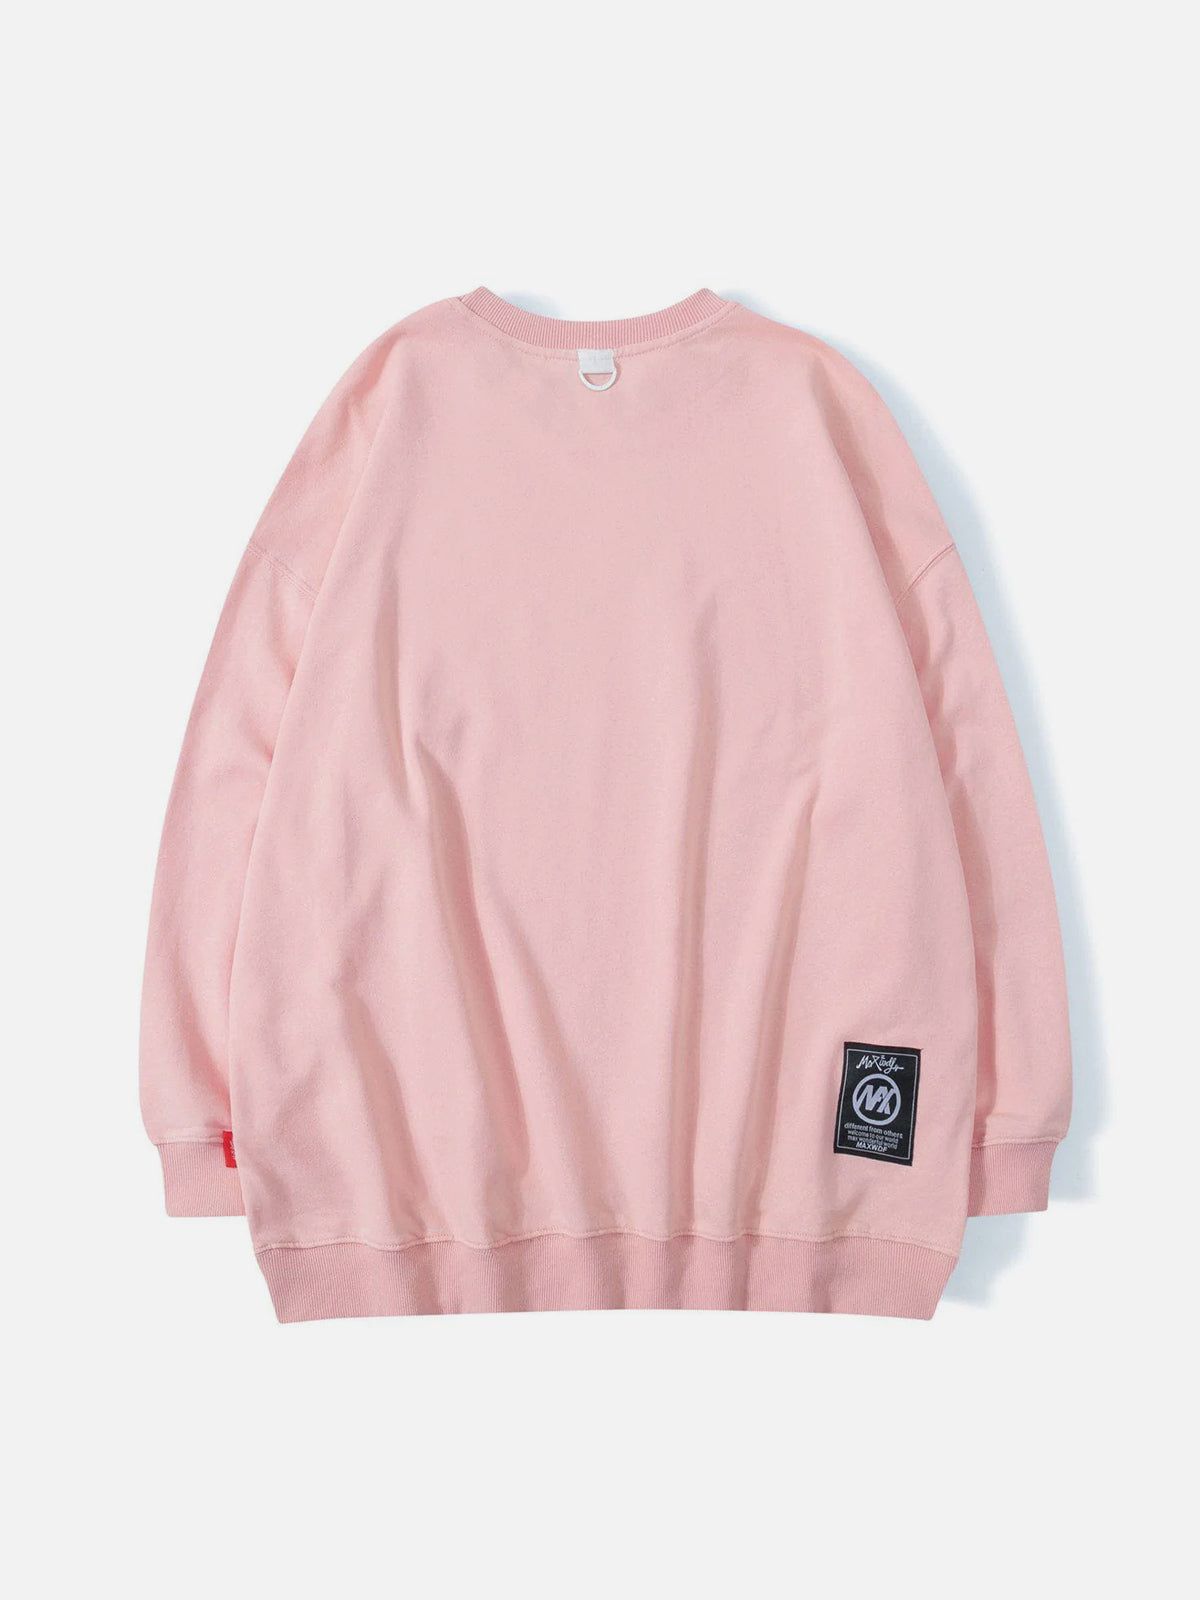 LUXENFY™ - Astronaut Print Sweatshirt luxenfy.com